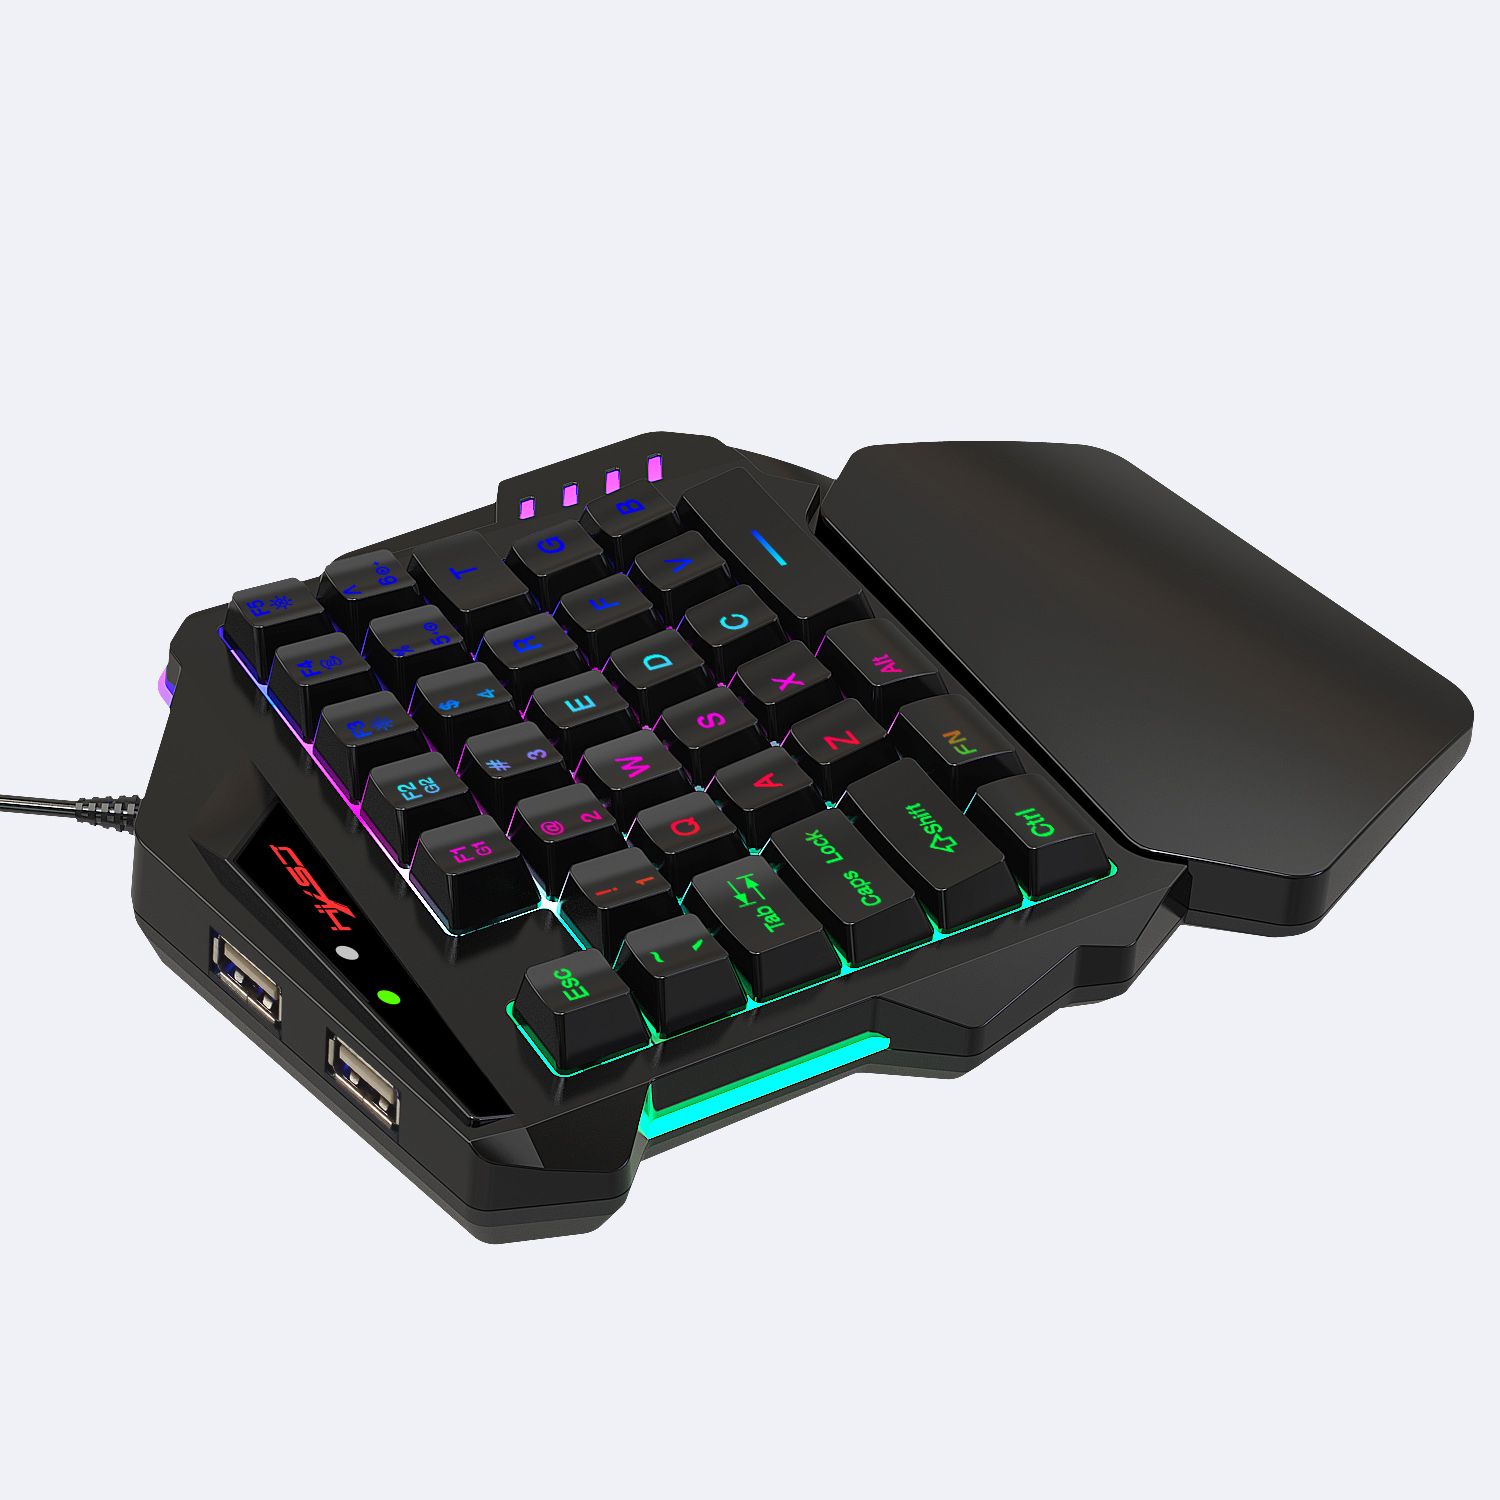 HXSJ-V500-One-handed-Gaming-Keyboard-35-Keys-RGB-Backlight-Bulit-in-Converter-Single-hand-Keyboard-F-1747796